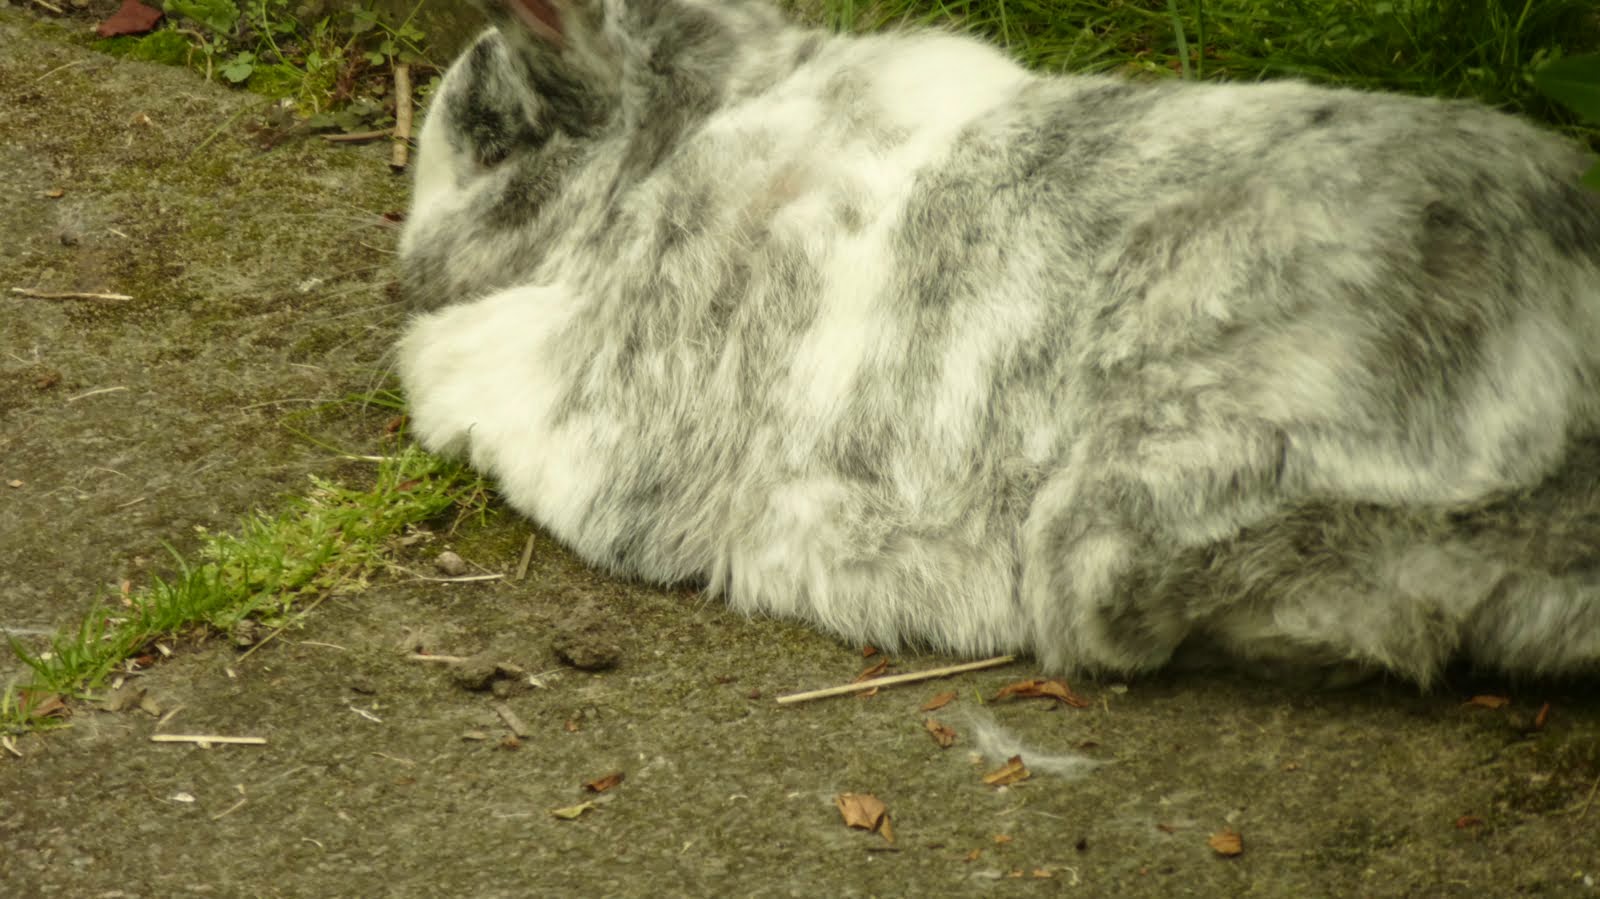 Here's a little rabbit grazing on the grass